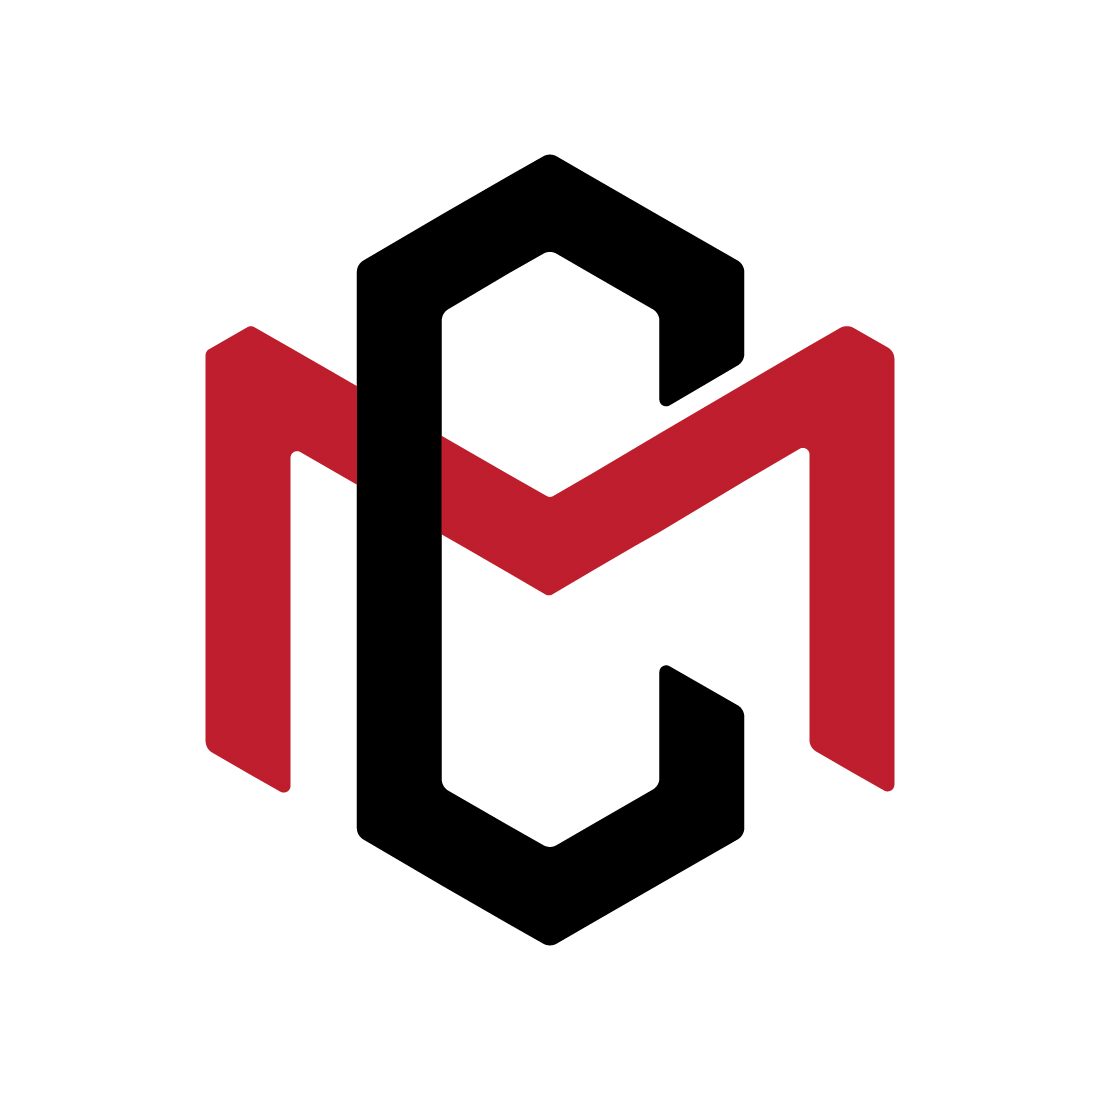 Initials Mc letters logo design vector images CM logo design red and black color best identity  MC logo template monogram Business icon design preview image.